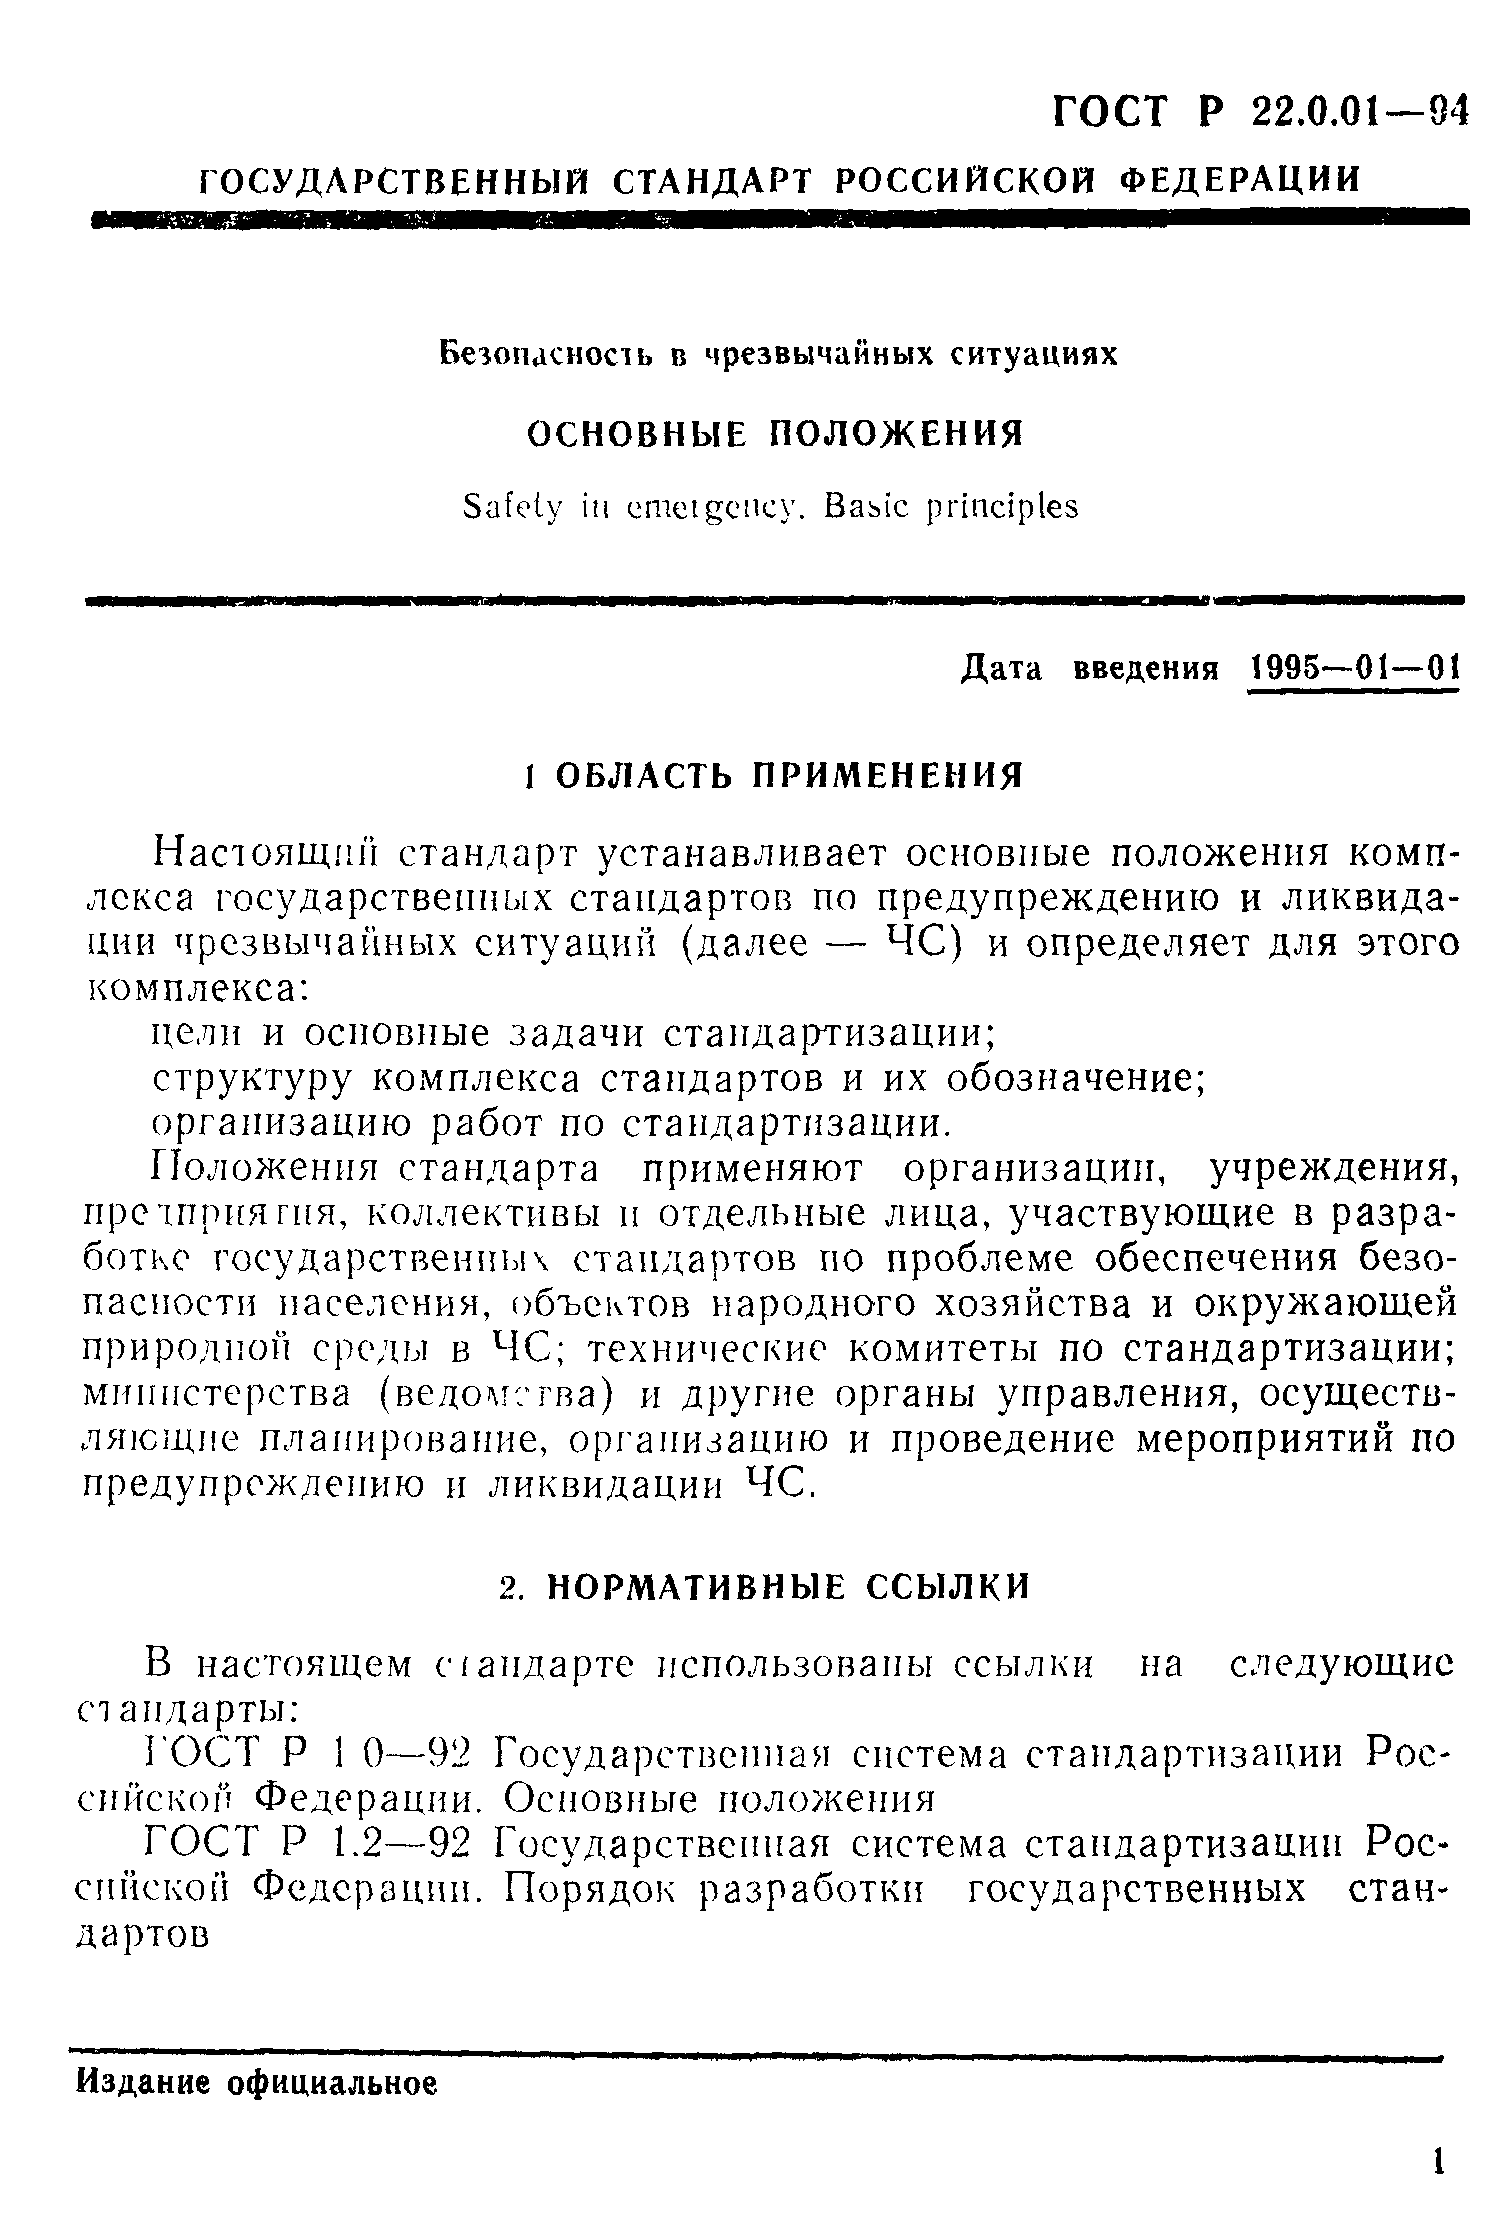 ГОСТ Р 22.0.01-94